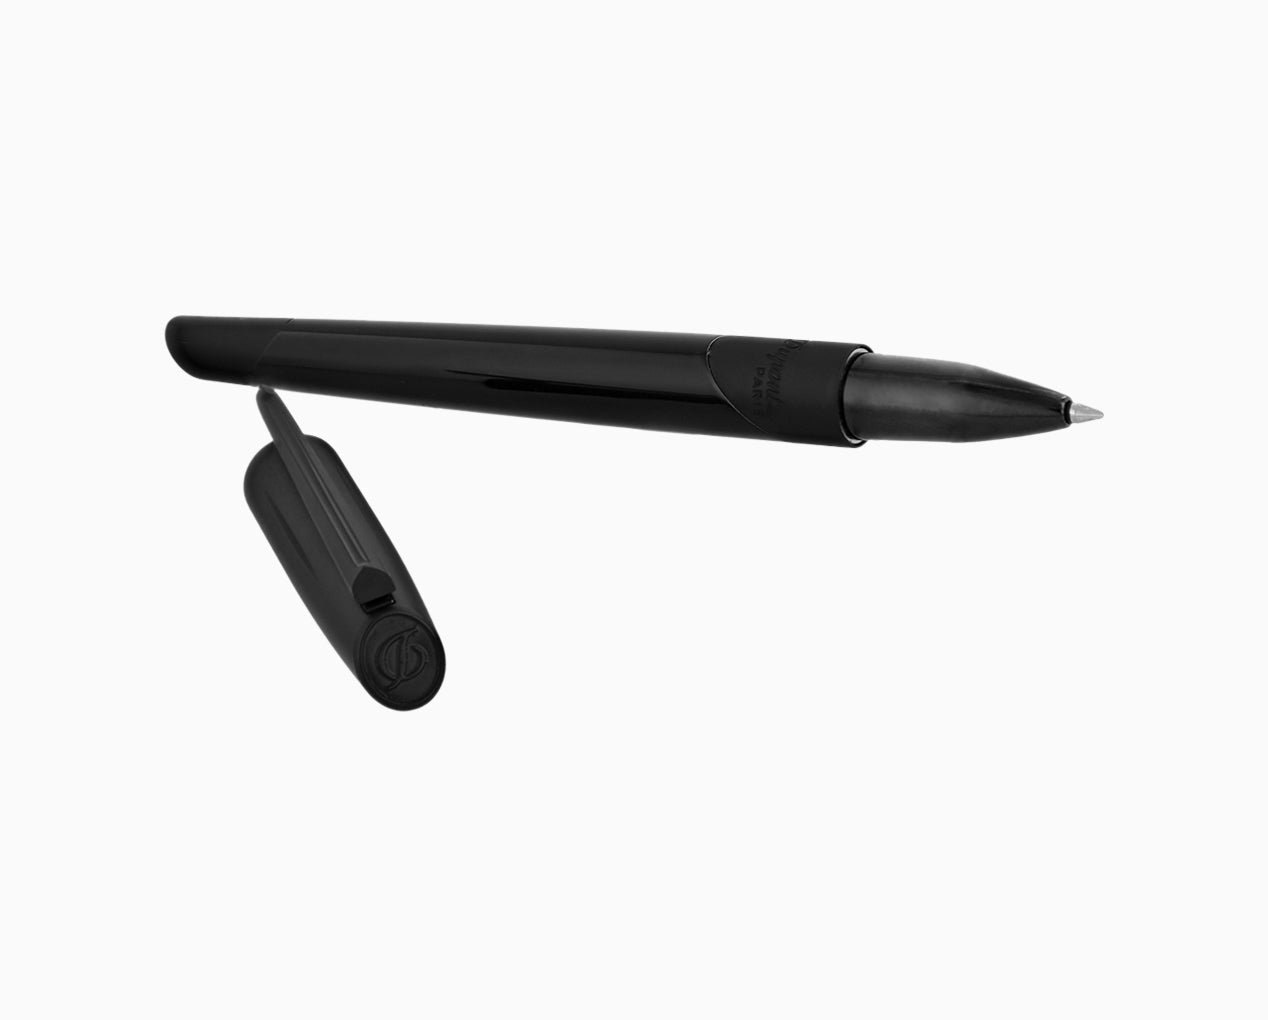 ST Dupont Defi Millenium Shiny Black & Matte Black Trim Rollerball Pen